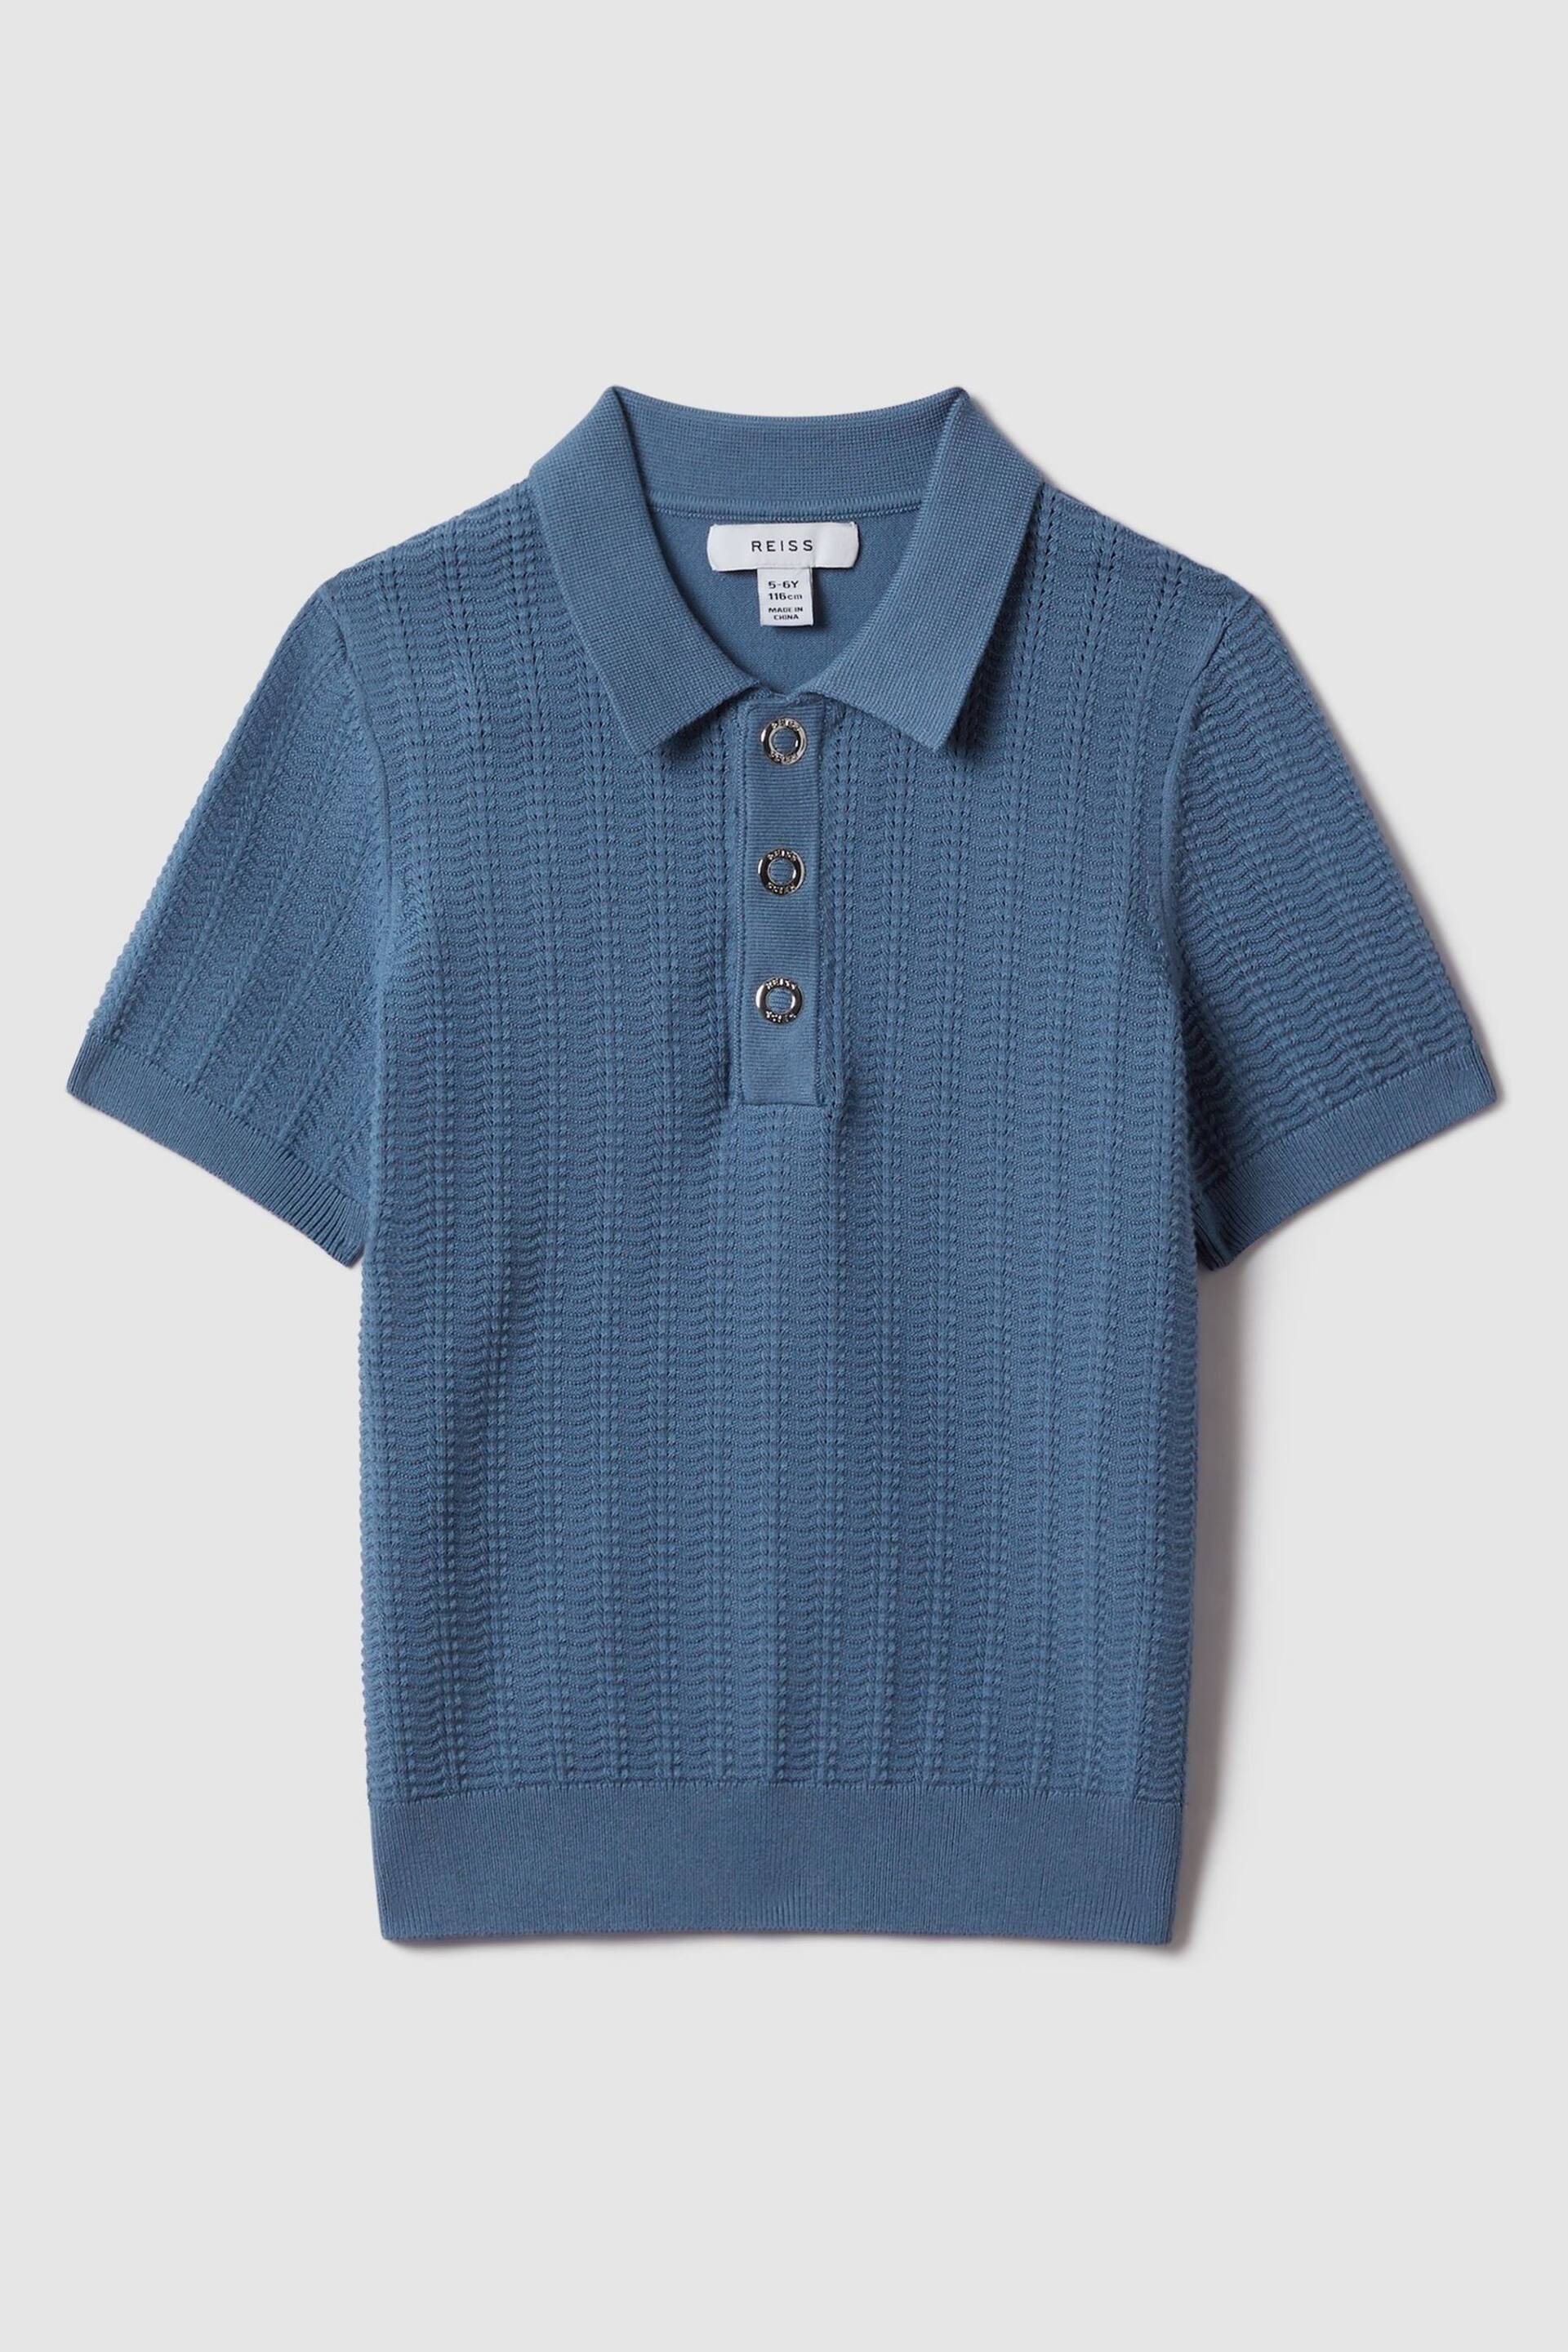 Reiss Cornflower Blue Pascoe Junior Textured Modal Blend Polo Shirt - Image 2 of 6